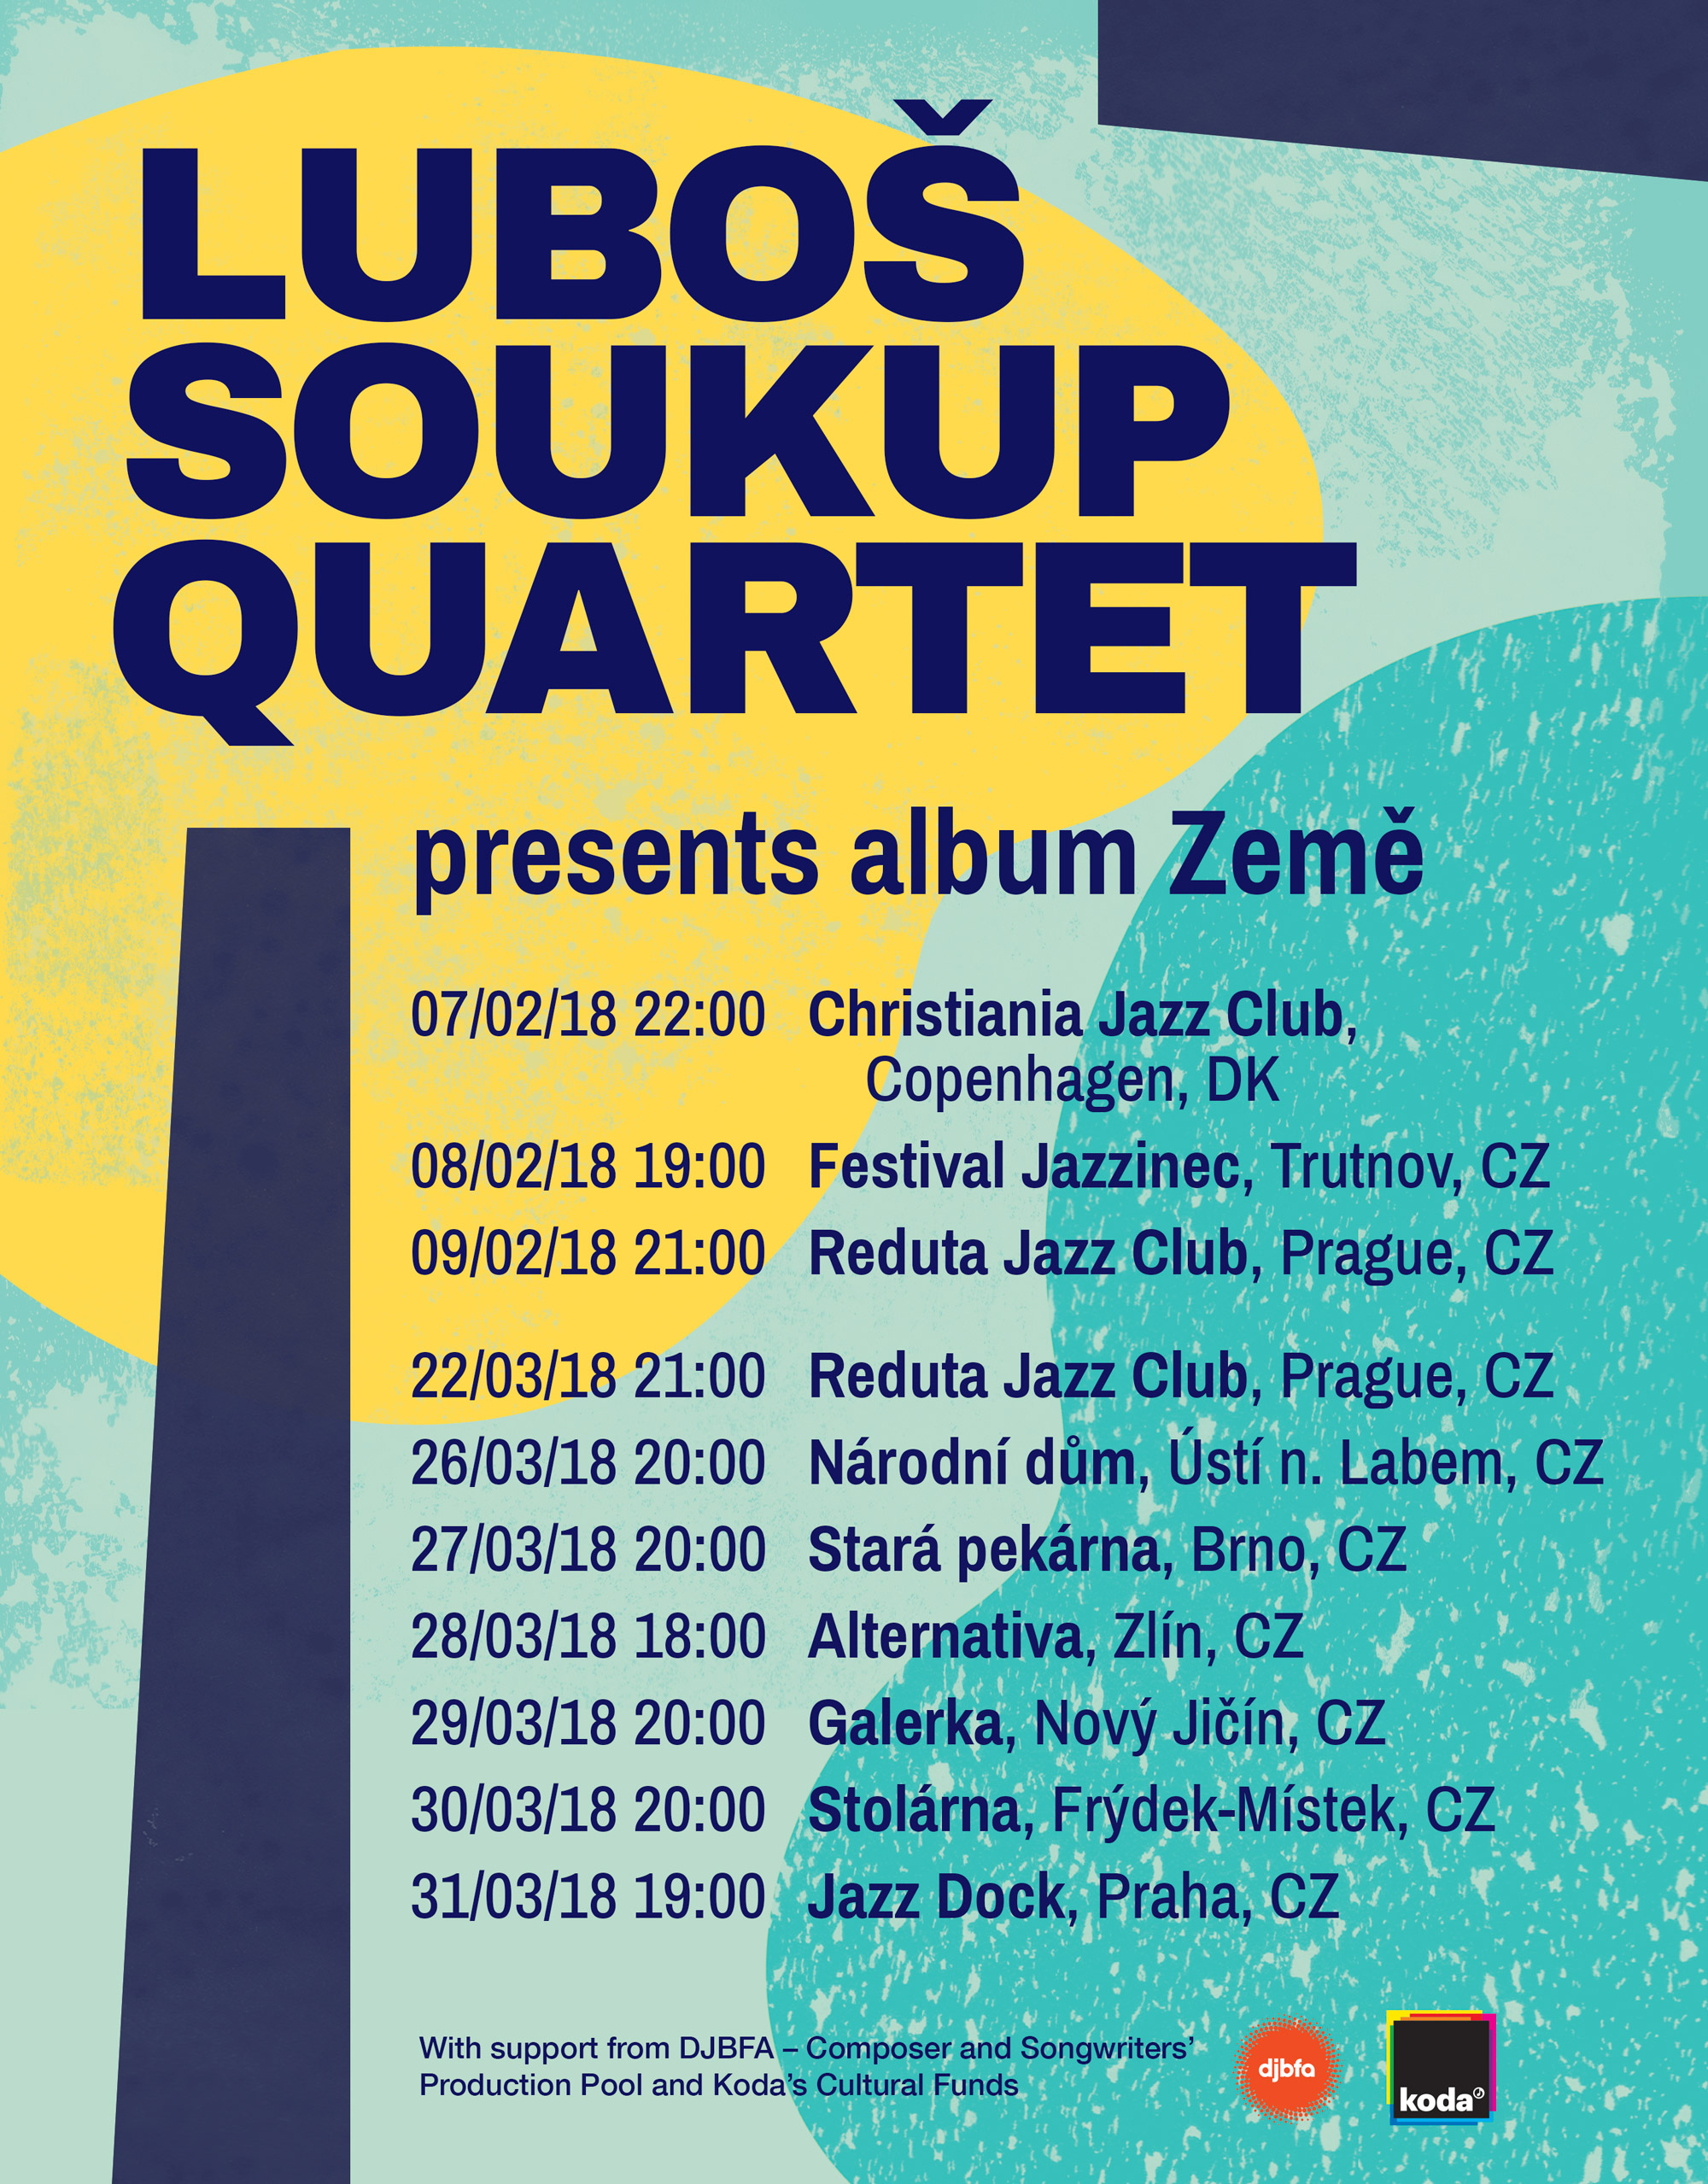 Lubos Soukup Quartet presenting album Zeme